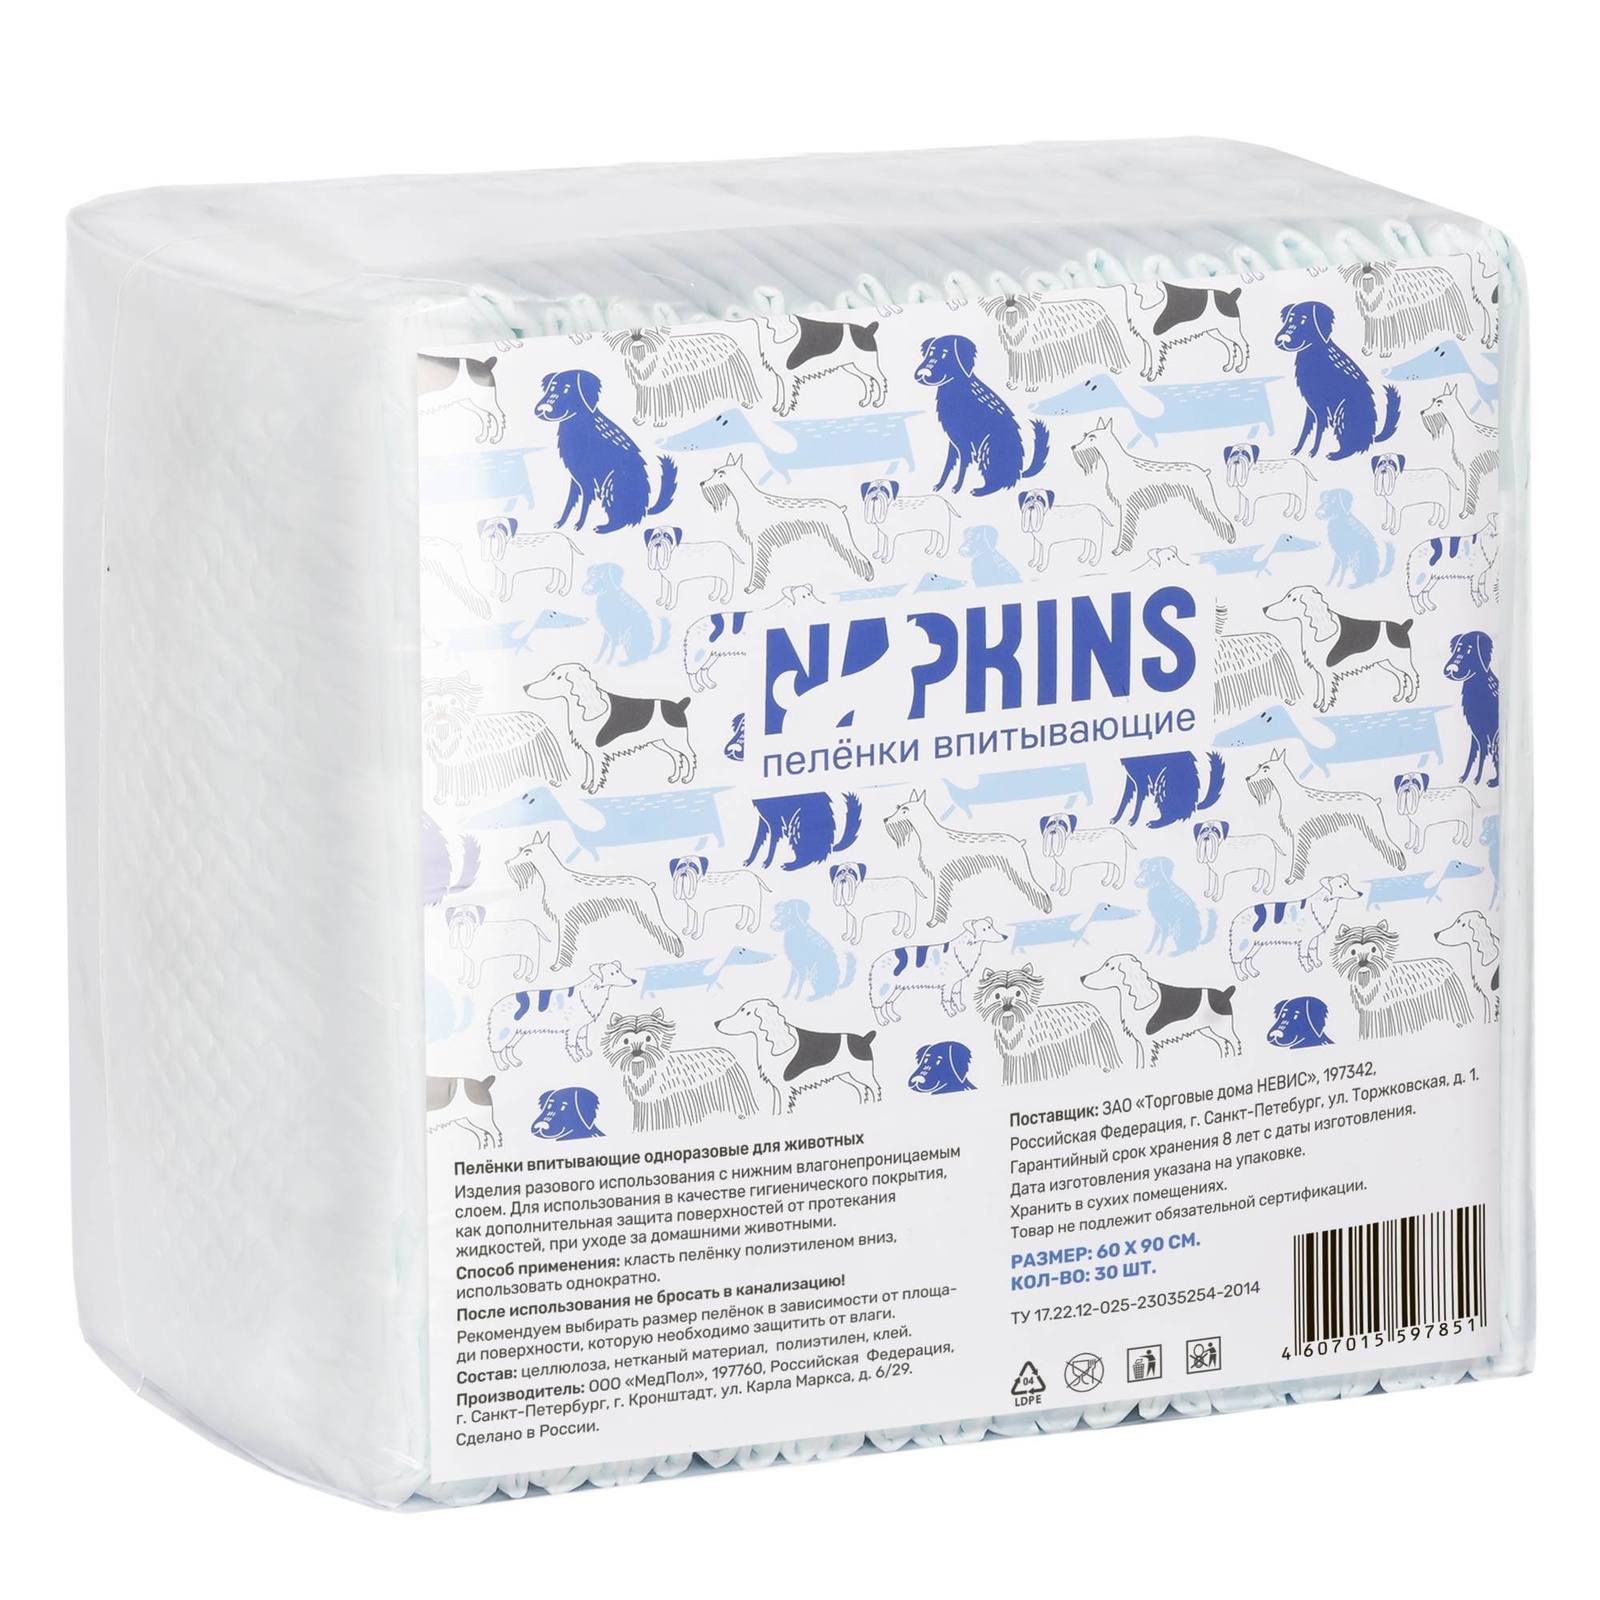 NAPKINS NAPKINS впитывающие пелёнки с целлюлозой для собак 60х90 (300 г) napkins napkins гелевые пелёнки для собак 60х60 300 г